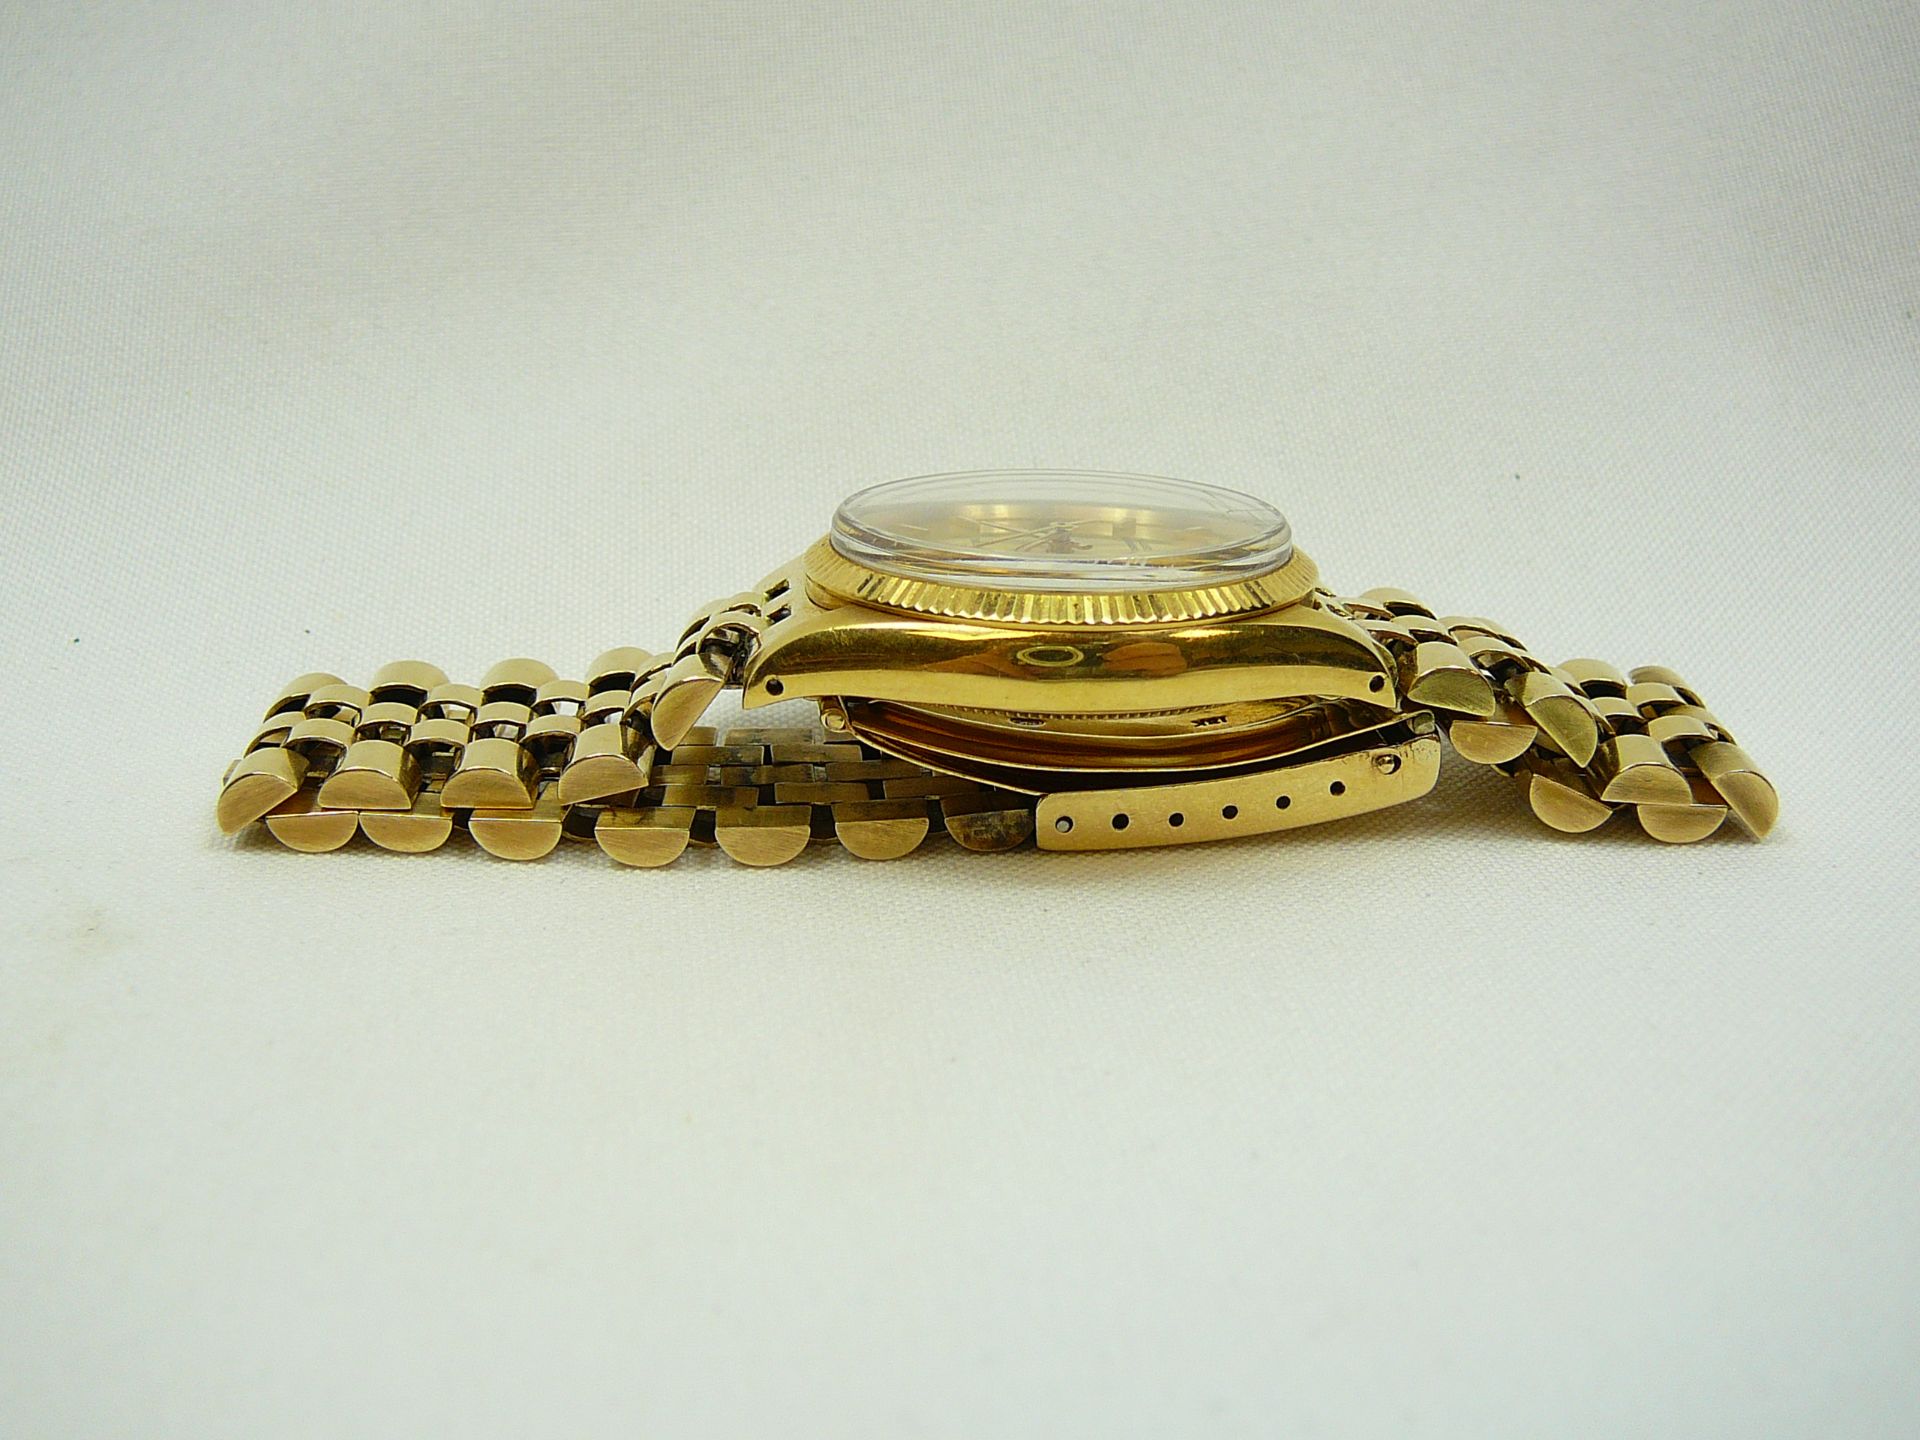 Gents Gold Rolex Wrist Watch - Image 4 of 6